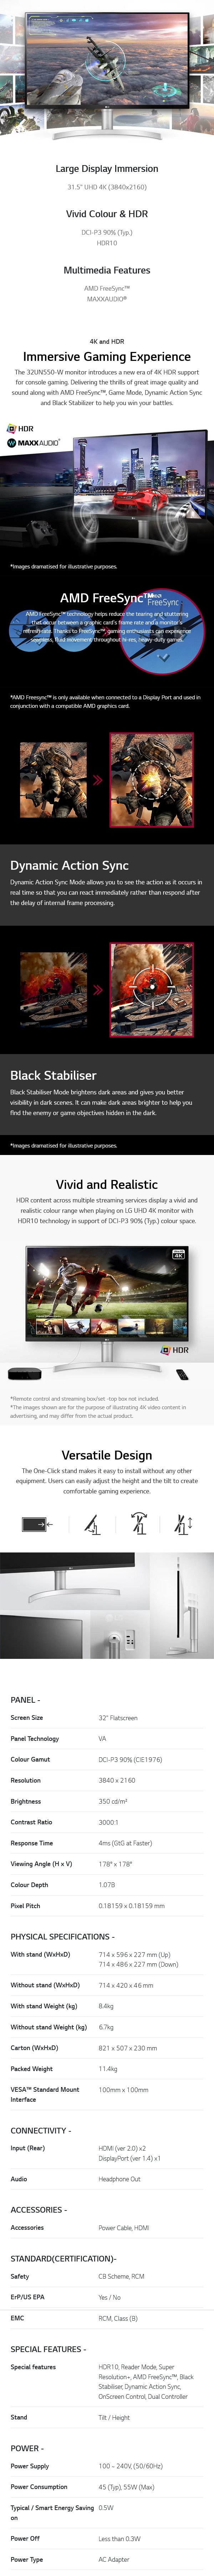 LG 32UN550-W 32" 4K UHD HDR FreeSync VA Monitor - Overview